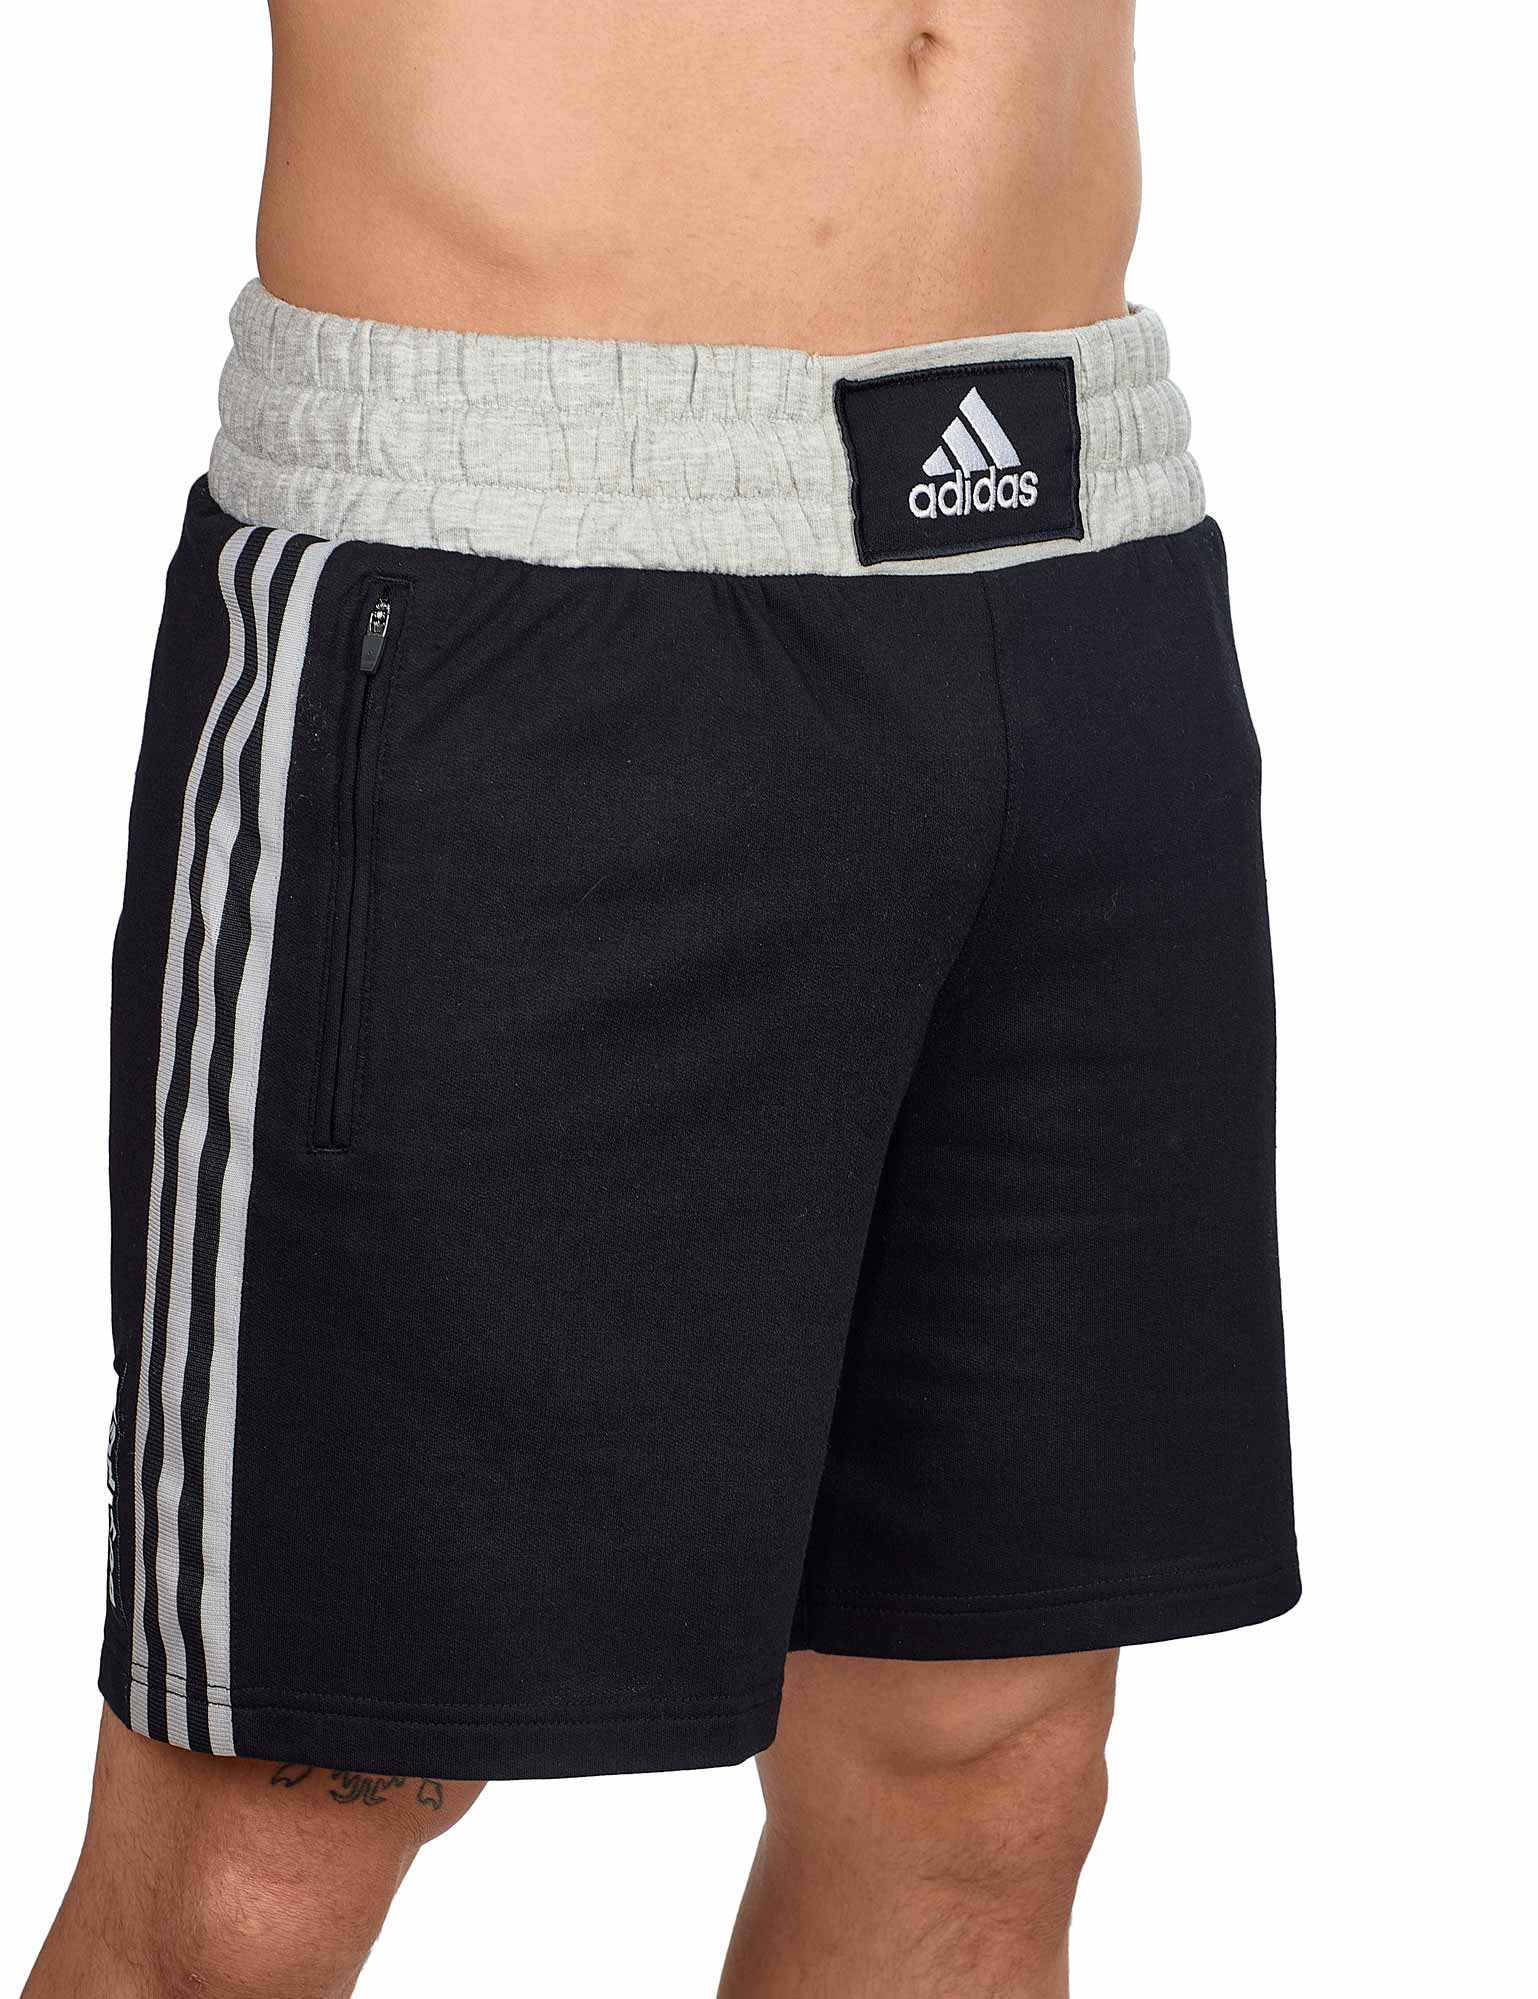 adidas boxing wear classic shorts BXWSH01